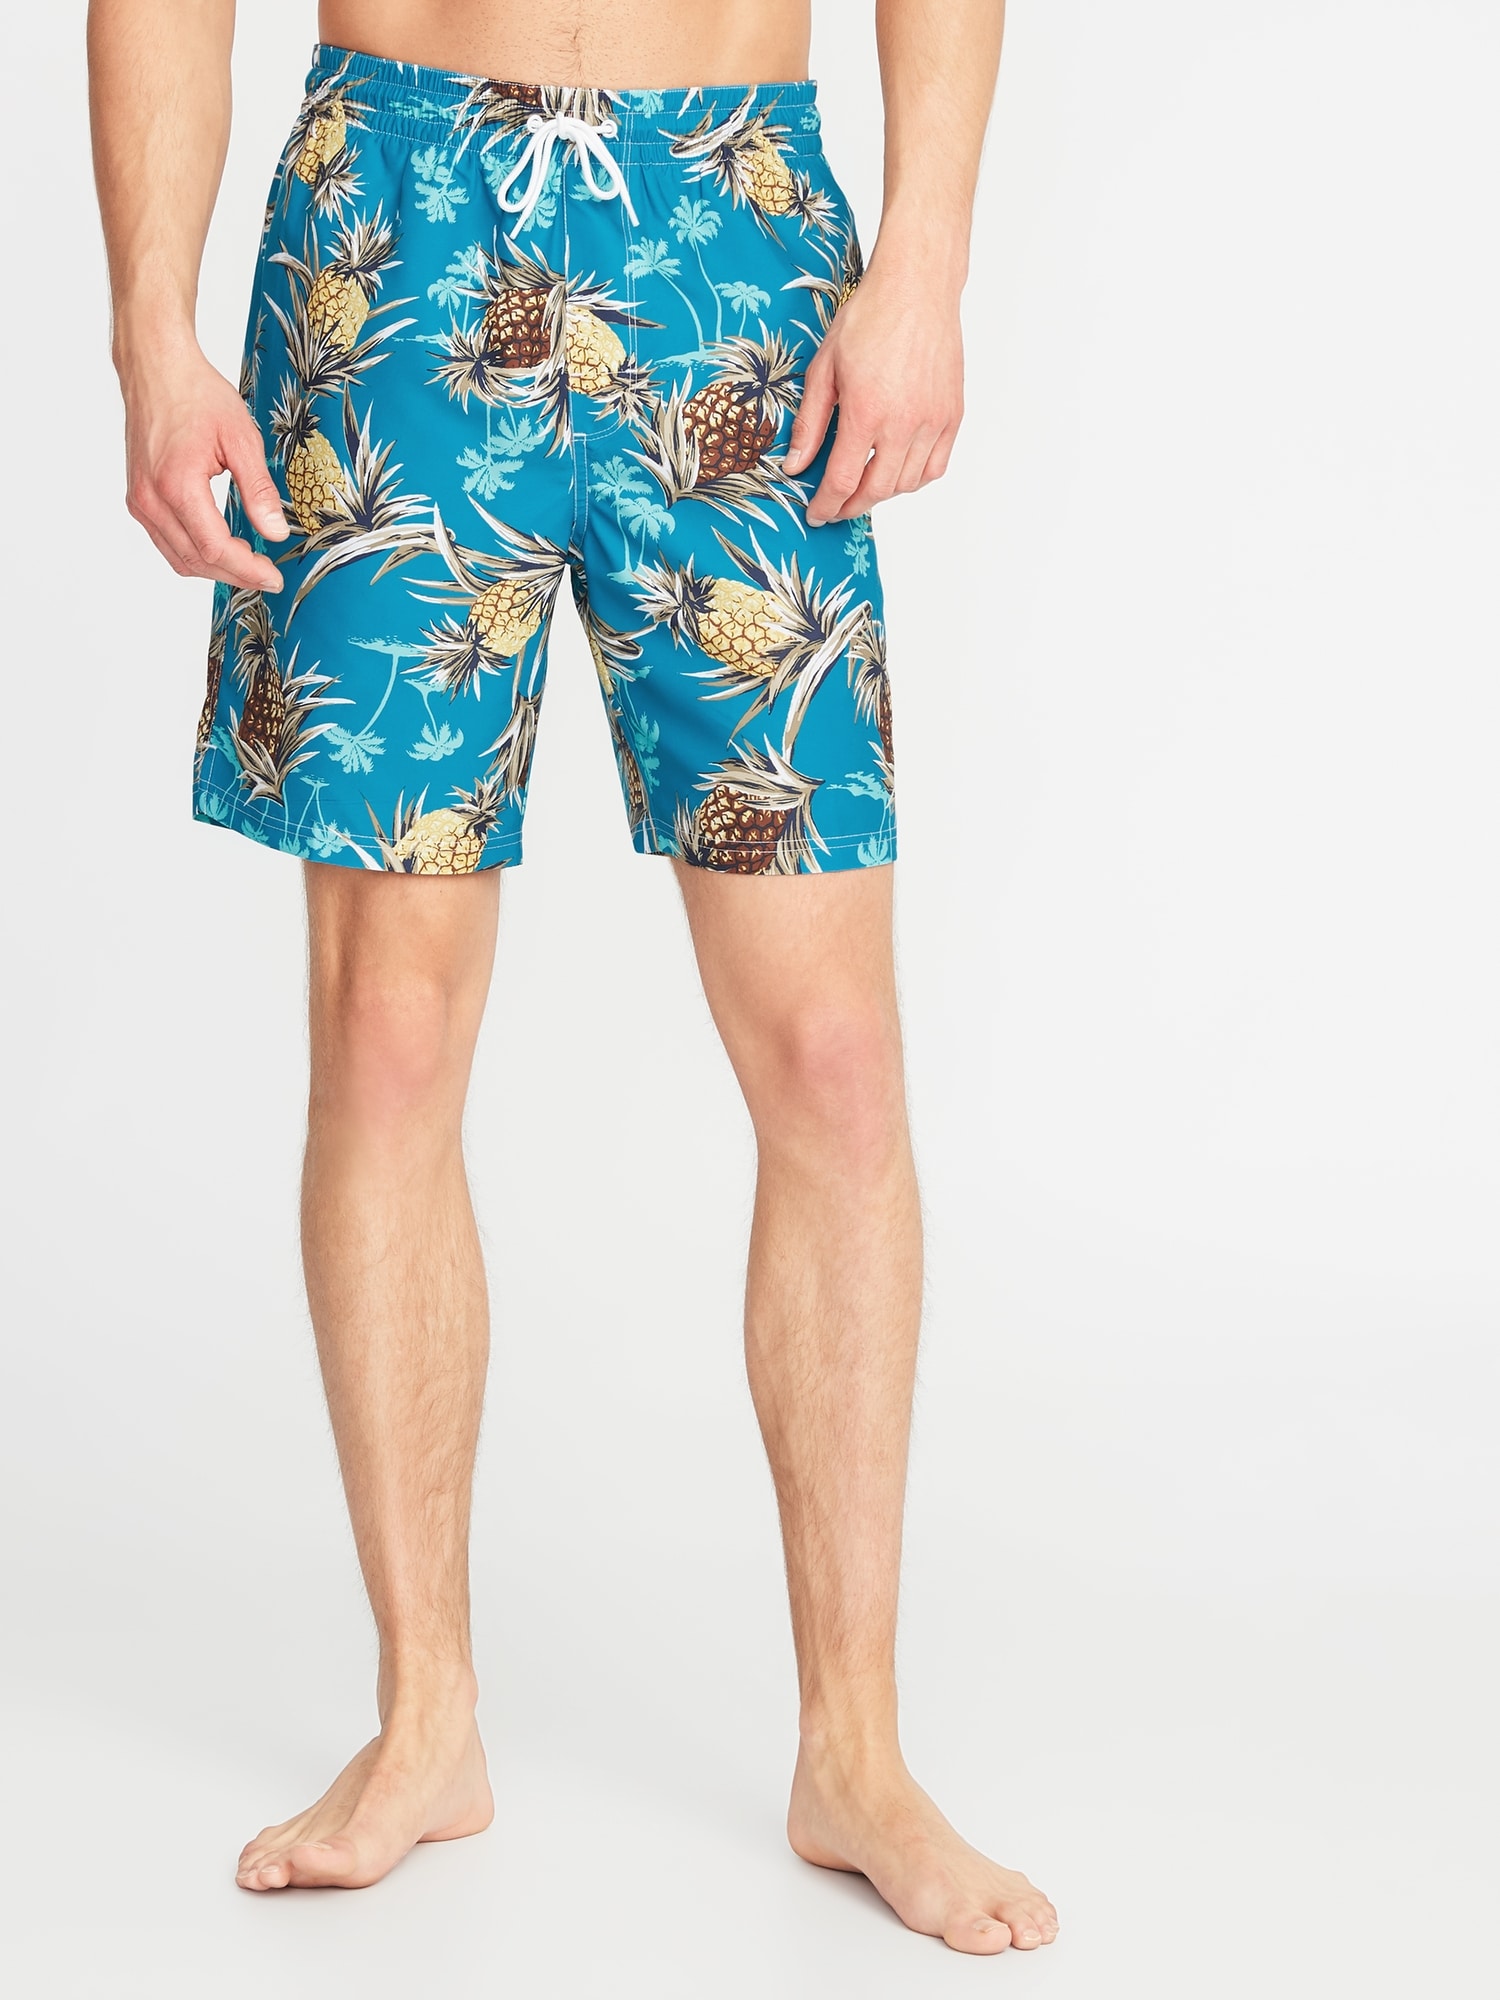 Printed Swim Trunks for Men - 8-inch inseam | Old Navy